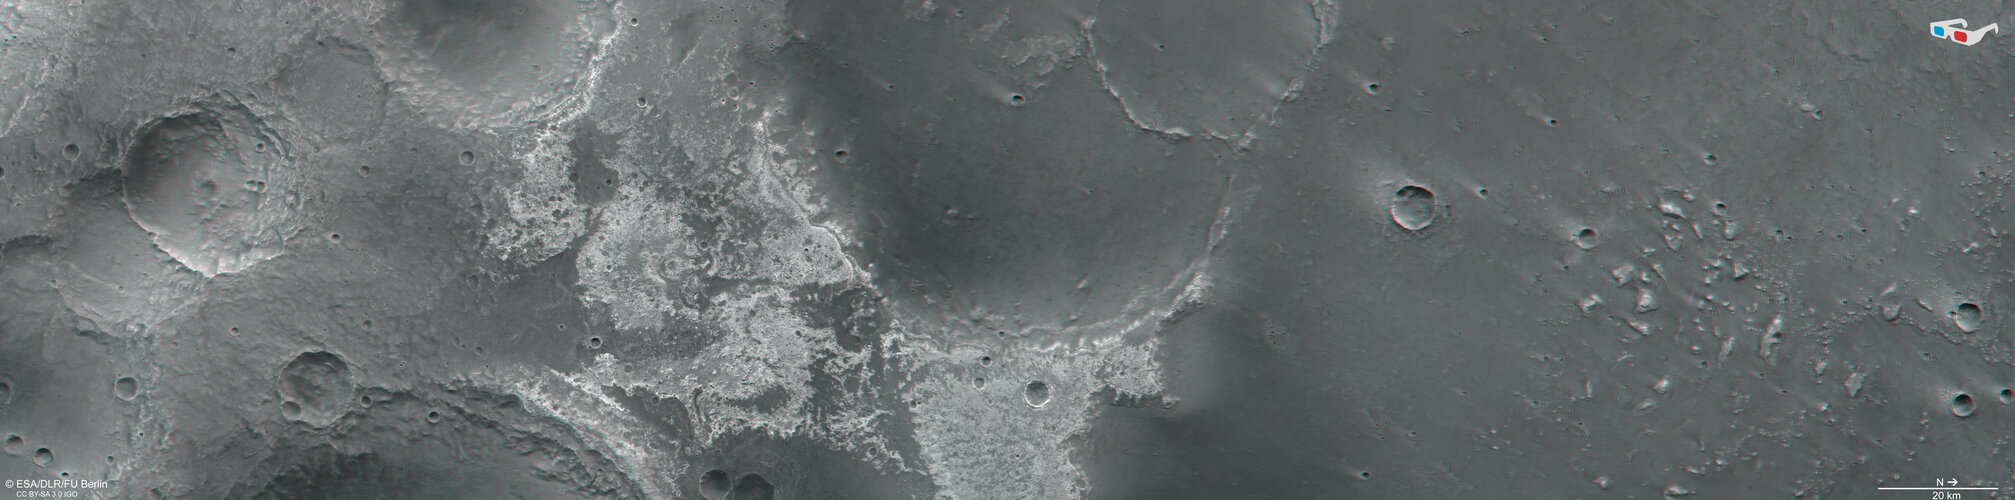 Mawrth Vallis in 3D